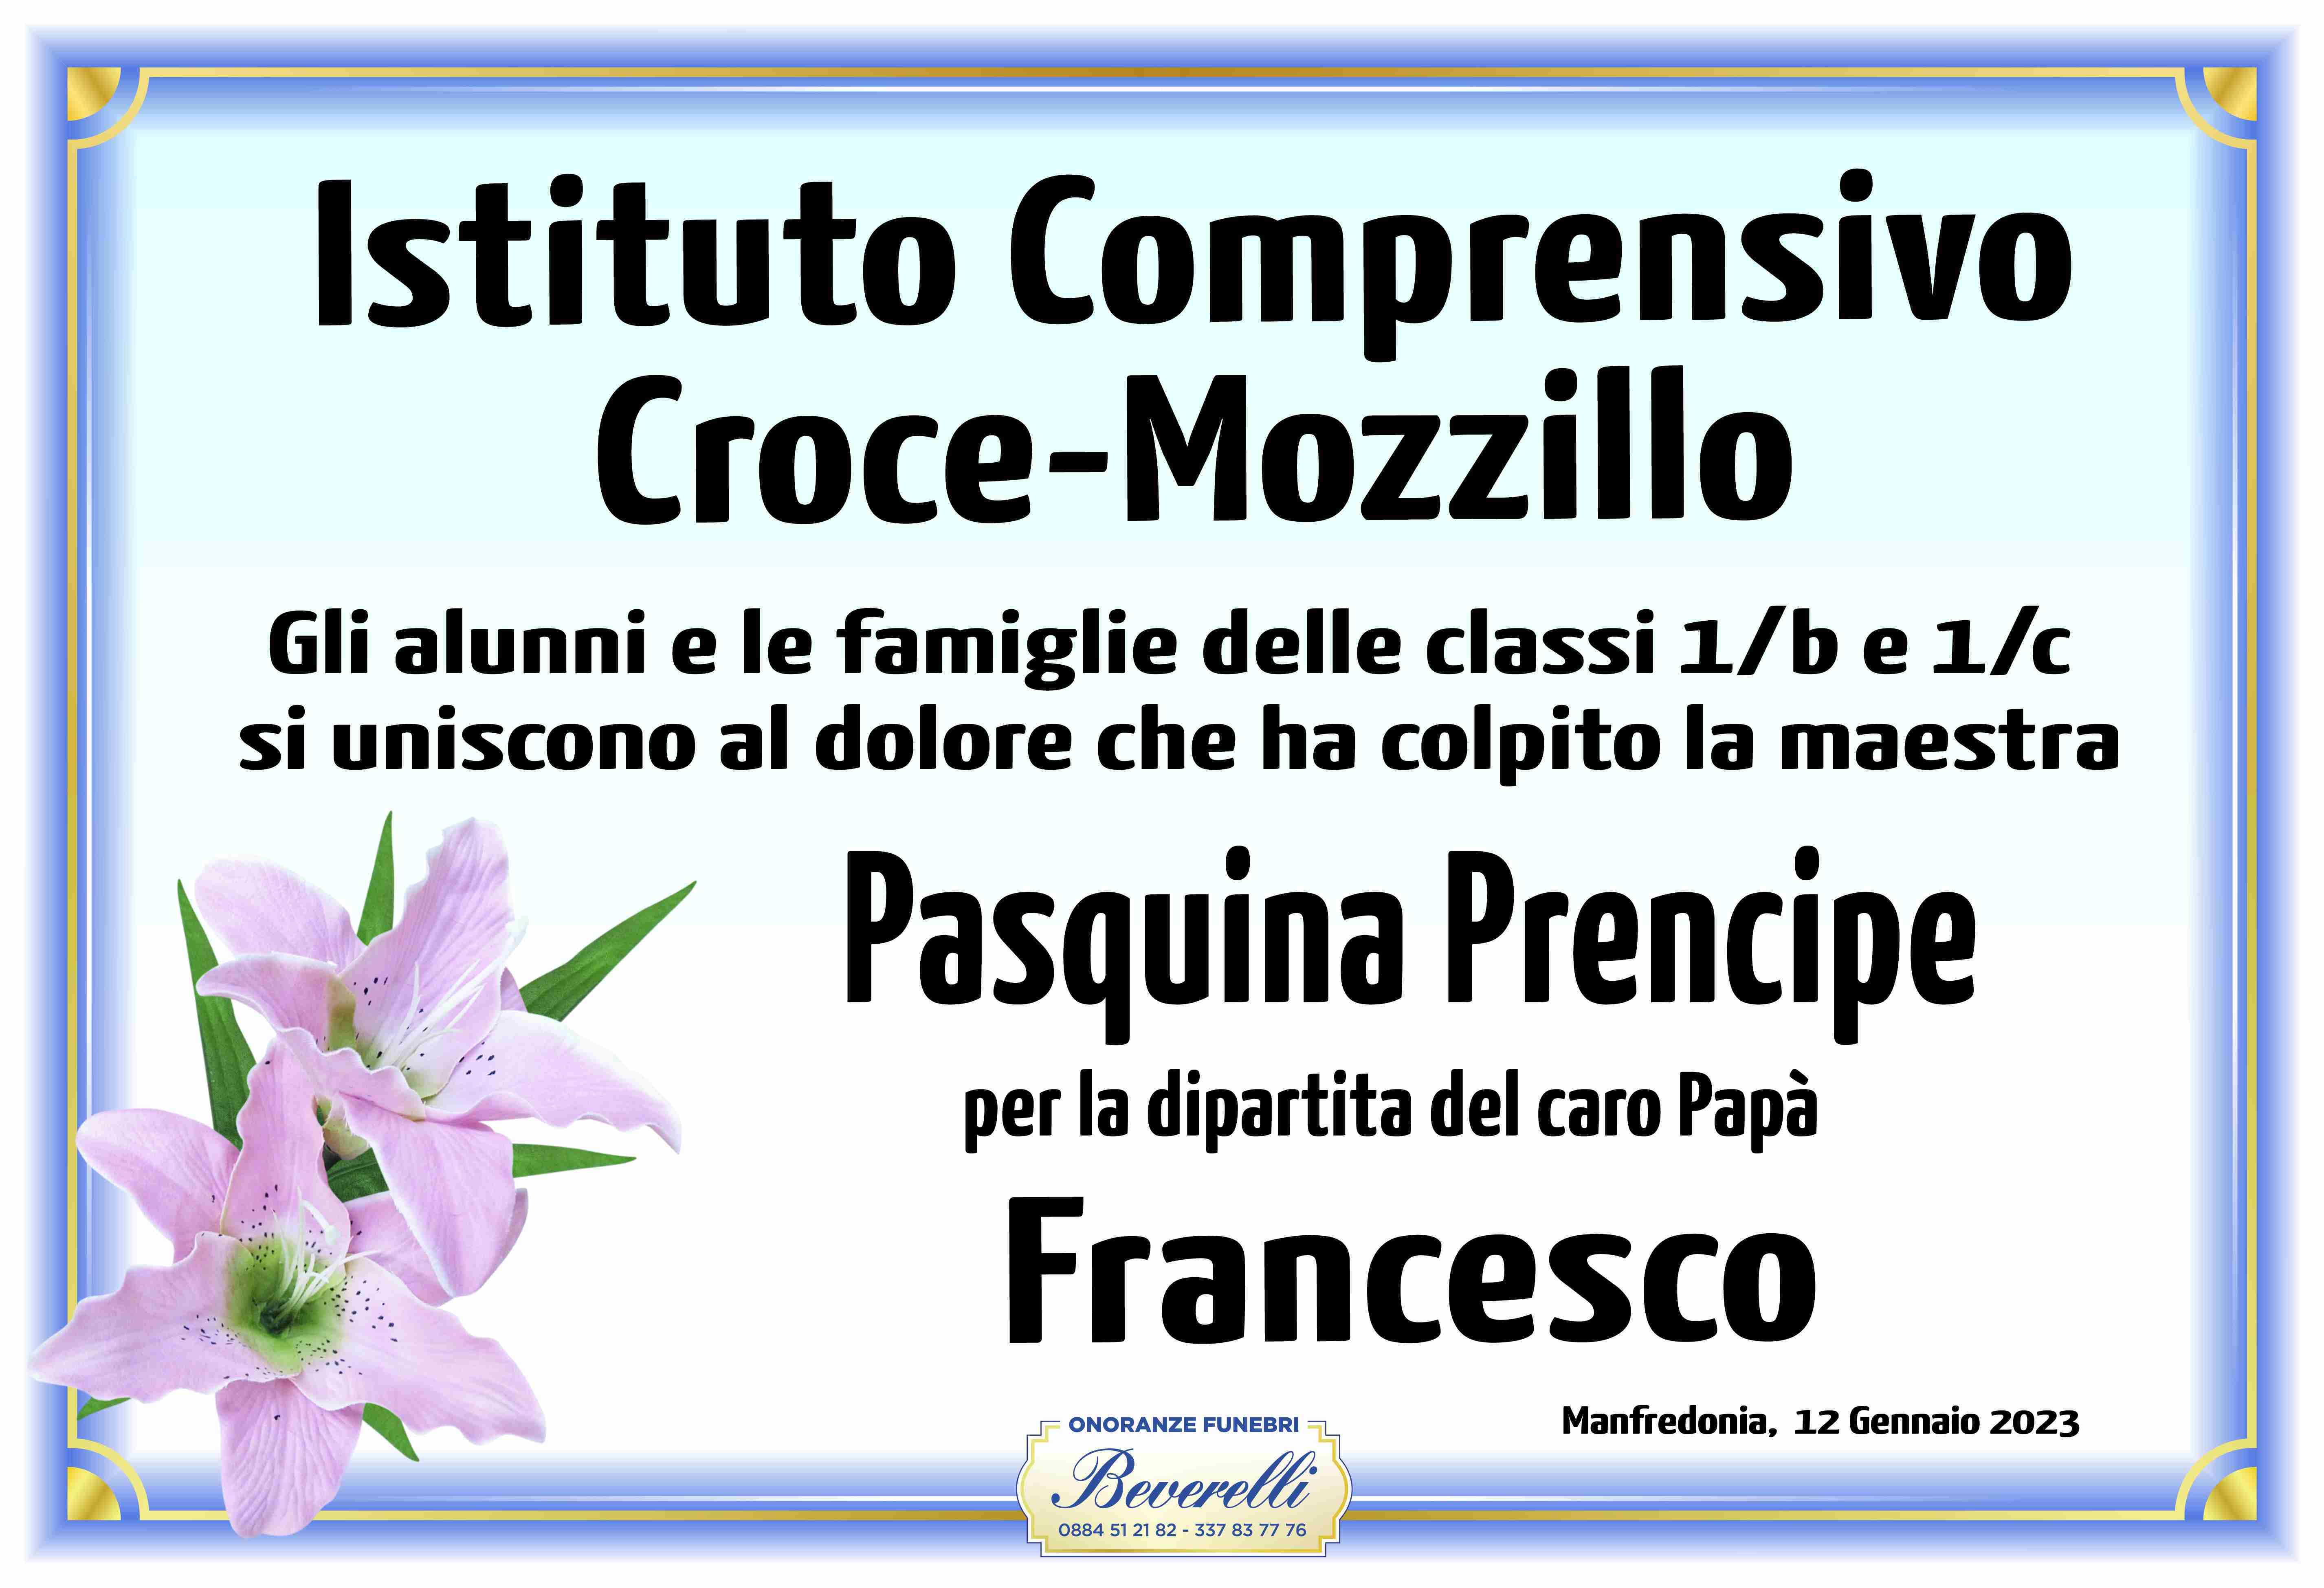 Francesco Prencipe